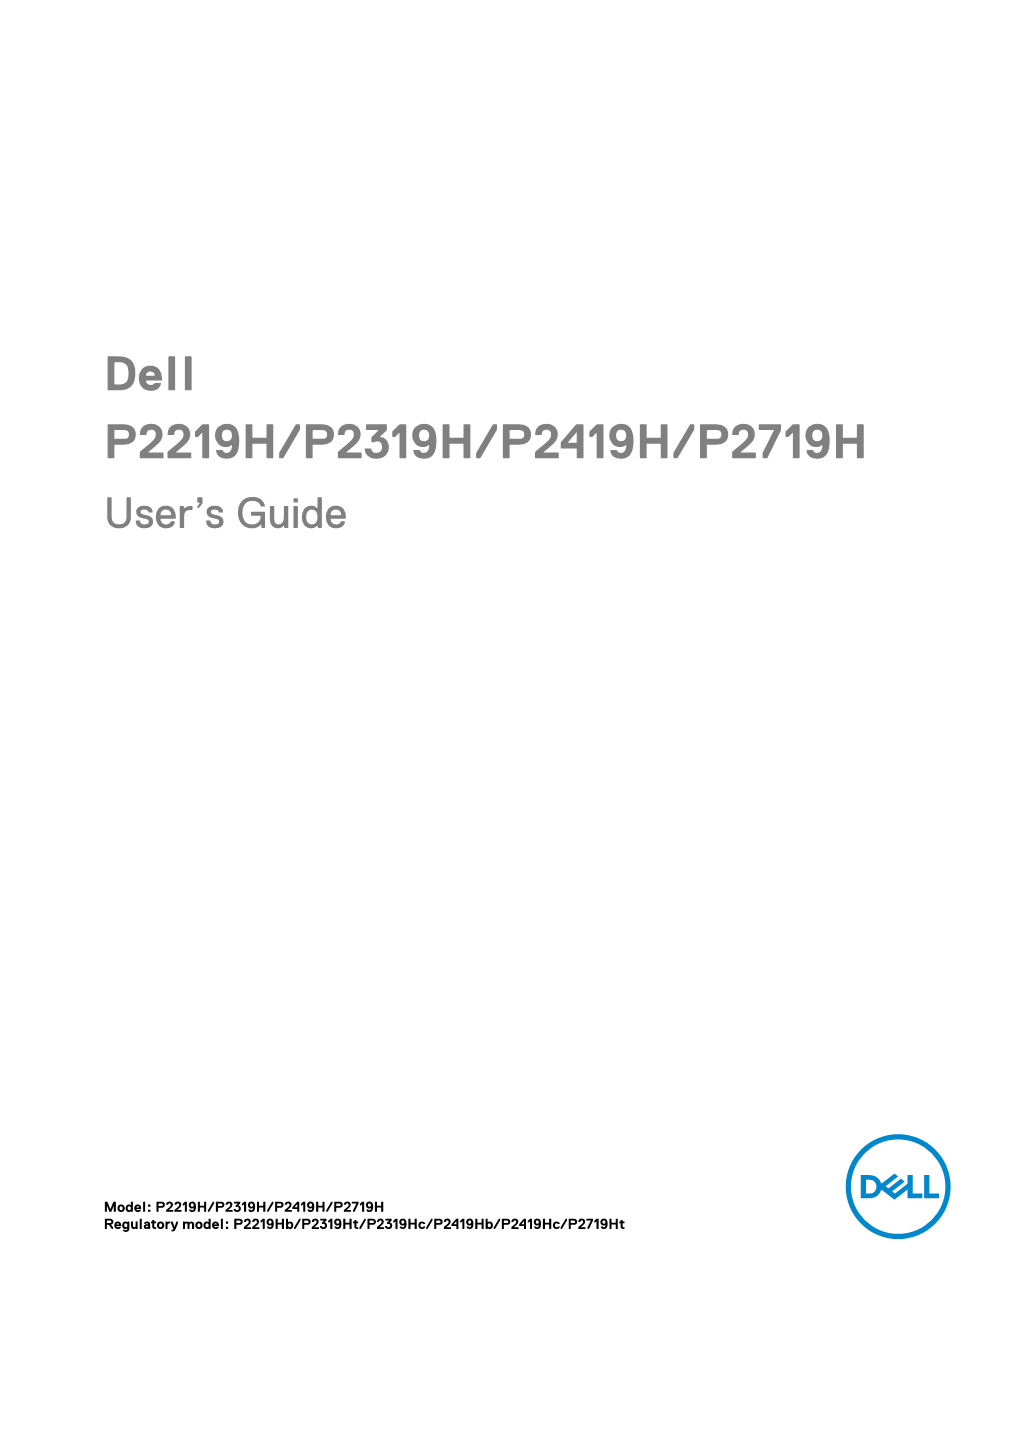 Dell P2219H/P2319H/P2419H/P2719H User’S Guide